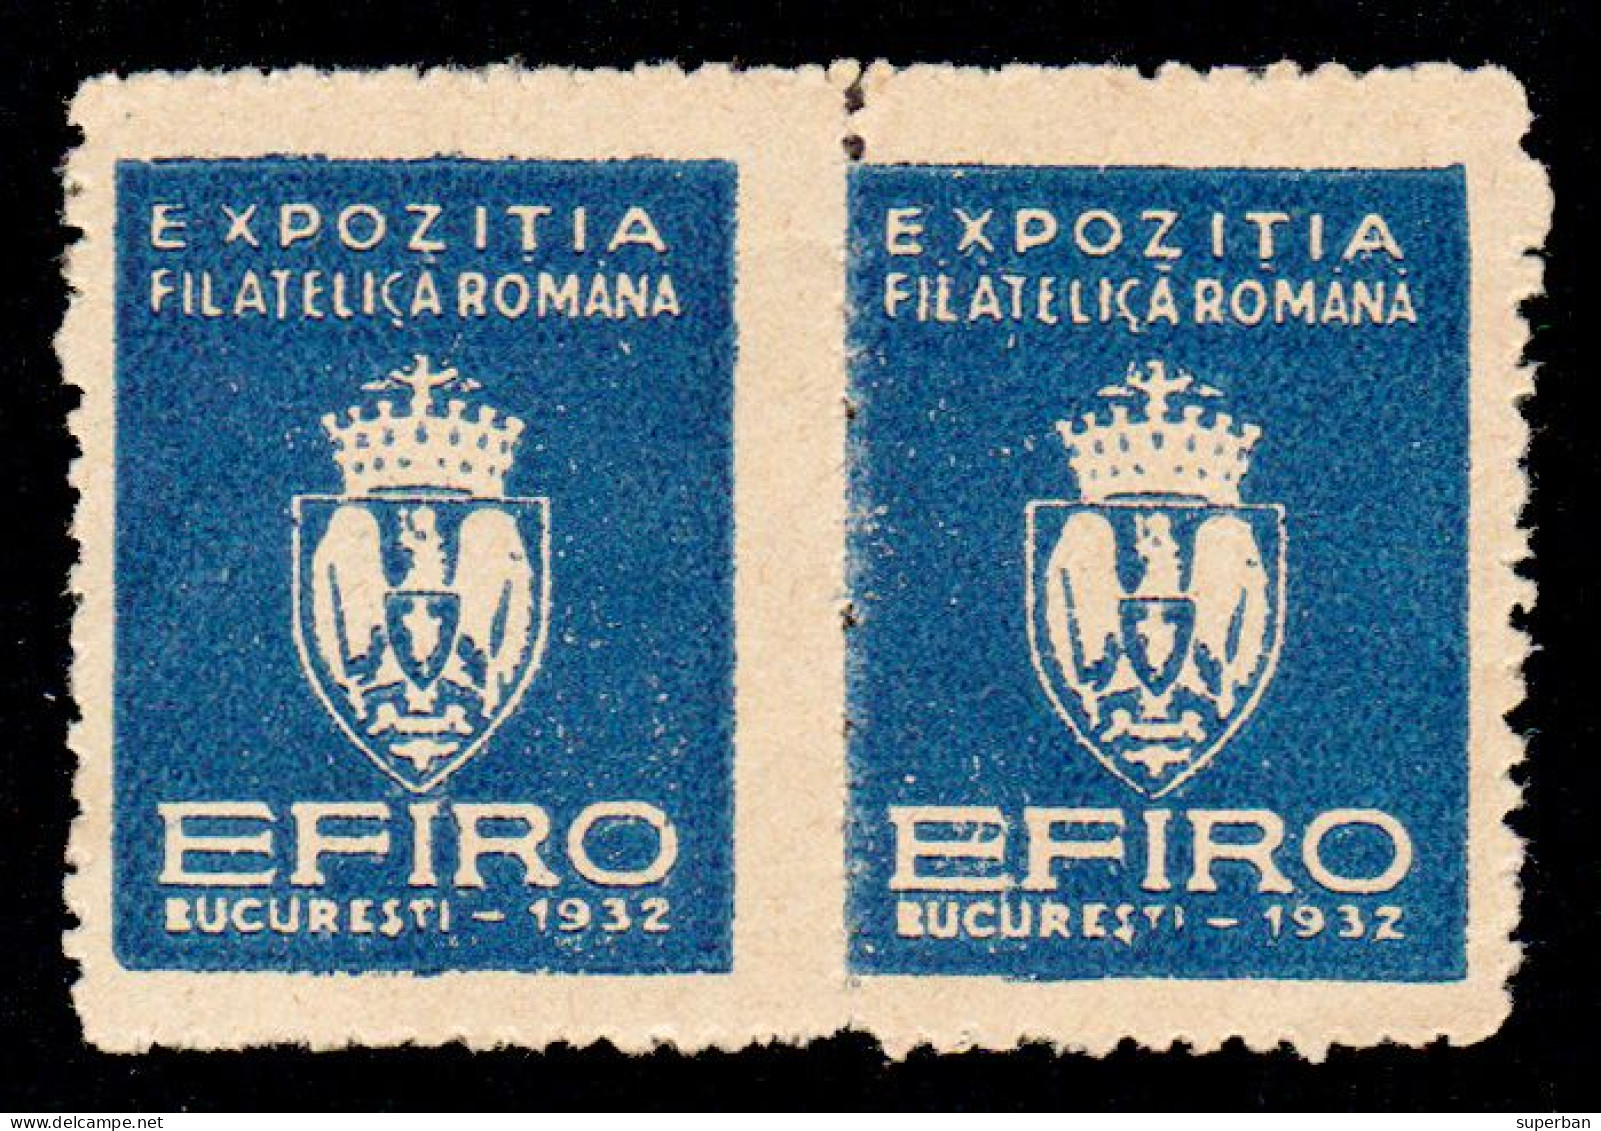 ROUMANIE / ROMANIA - VIGNETTE / CINDERELLA - 2 X EFIRO 1932 - EXPOZITIA FILATELICA ROMÂNA [ MNH ] - RRR ! (am819) - Fiscali